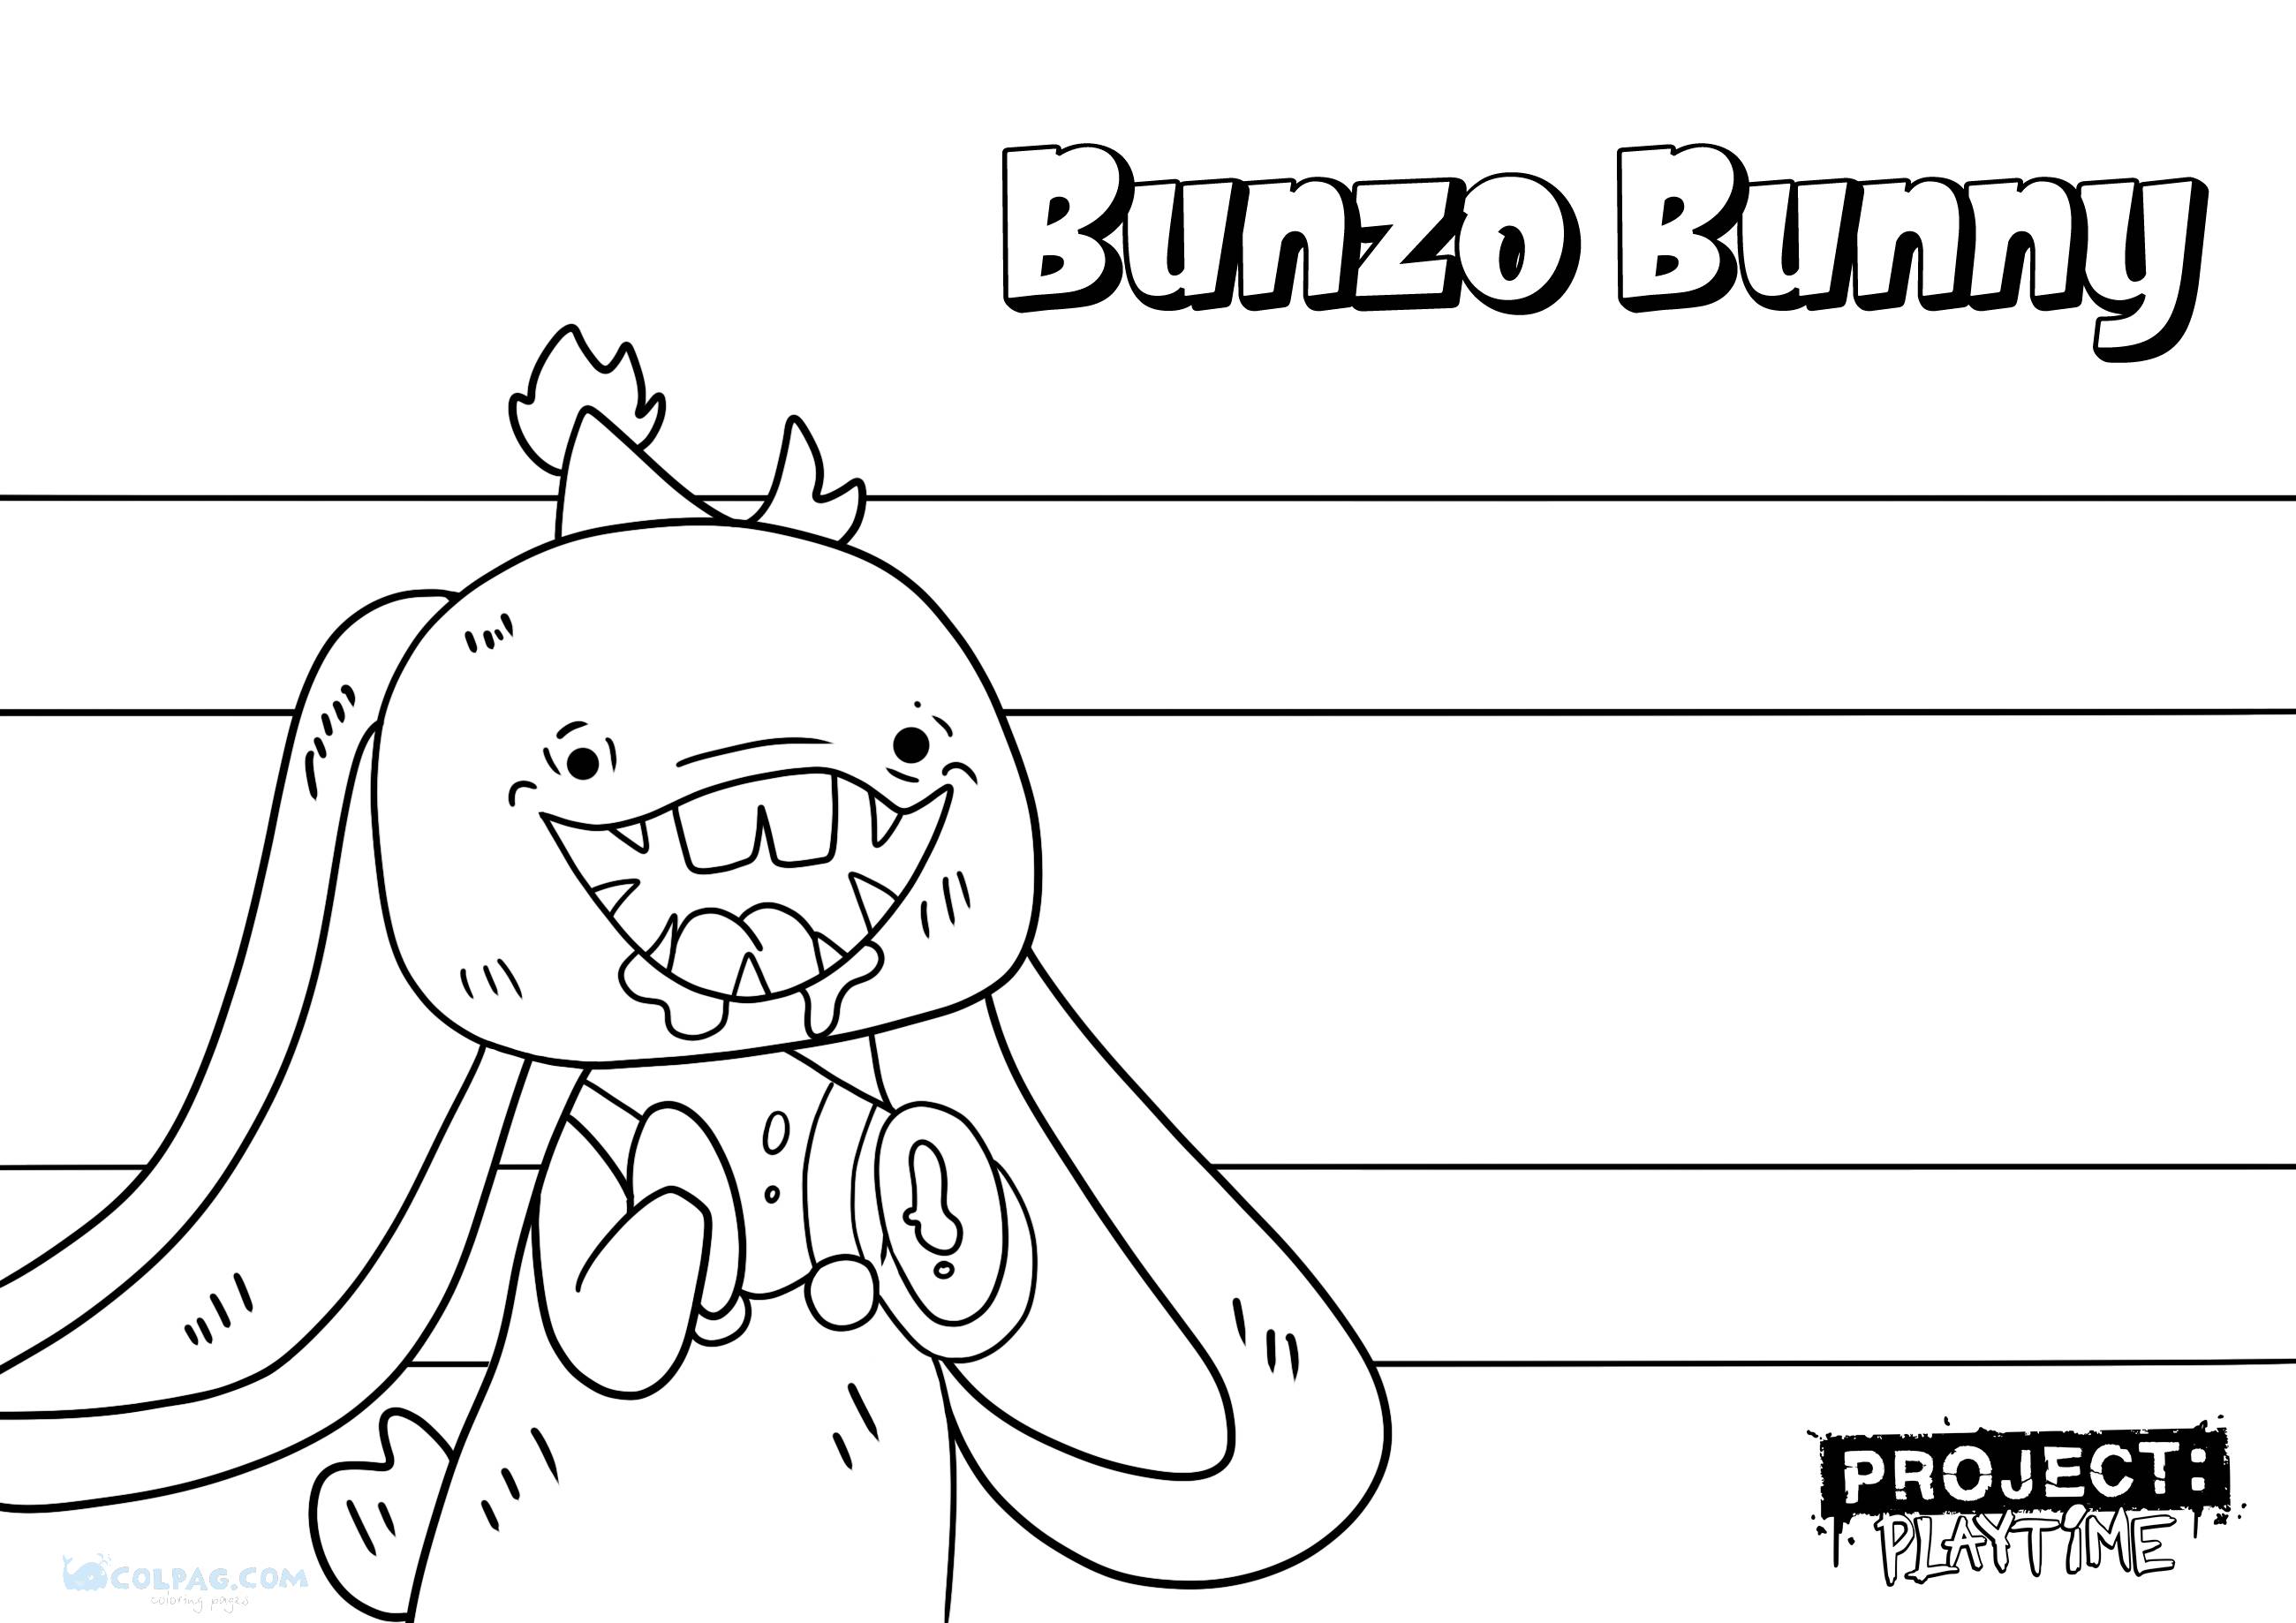 bunzo-bunny-coloring-page-colpag-com-3